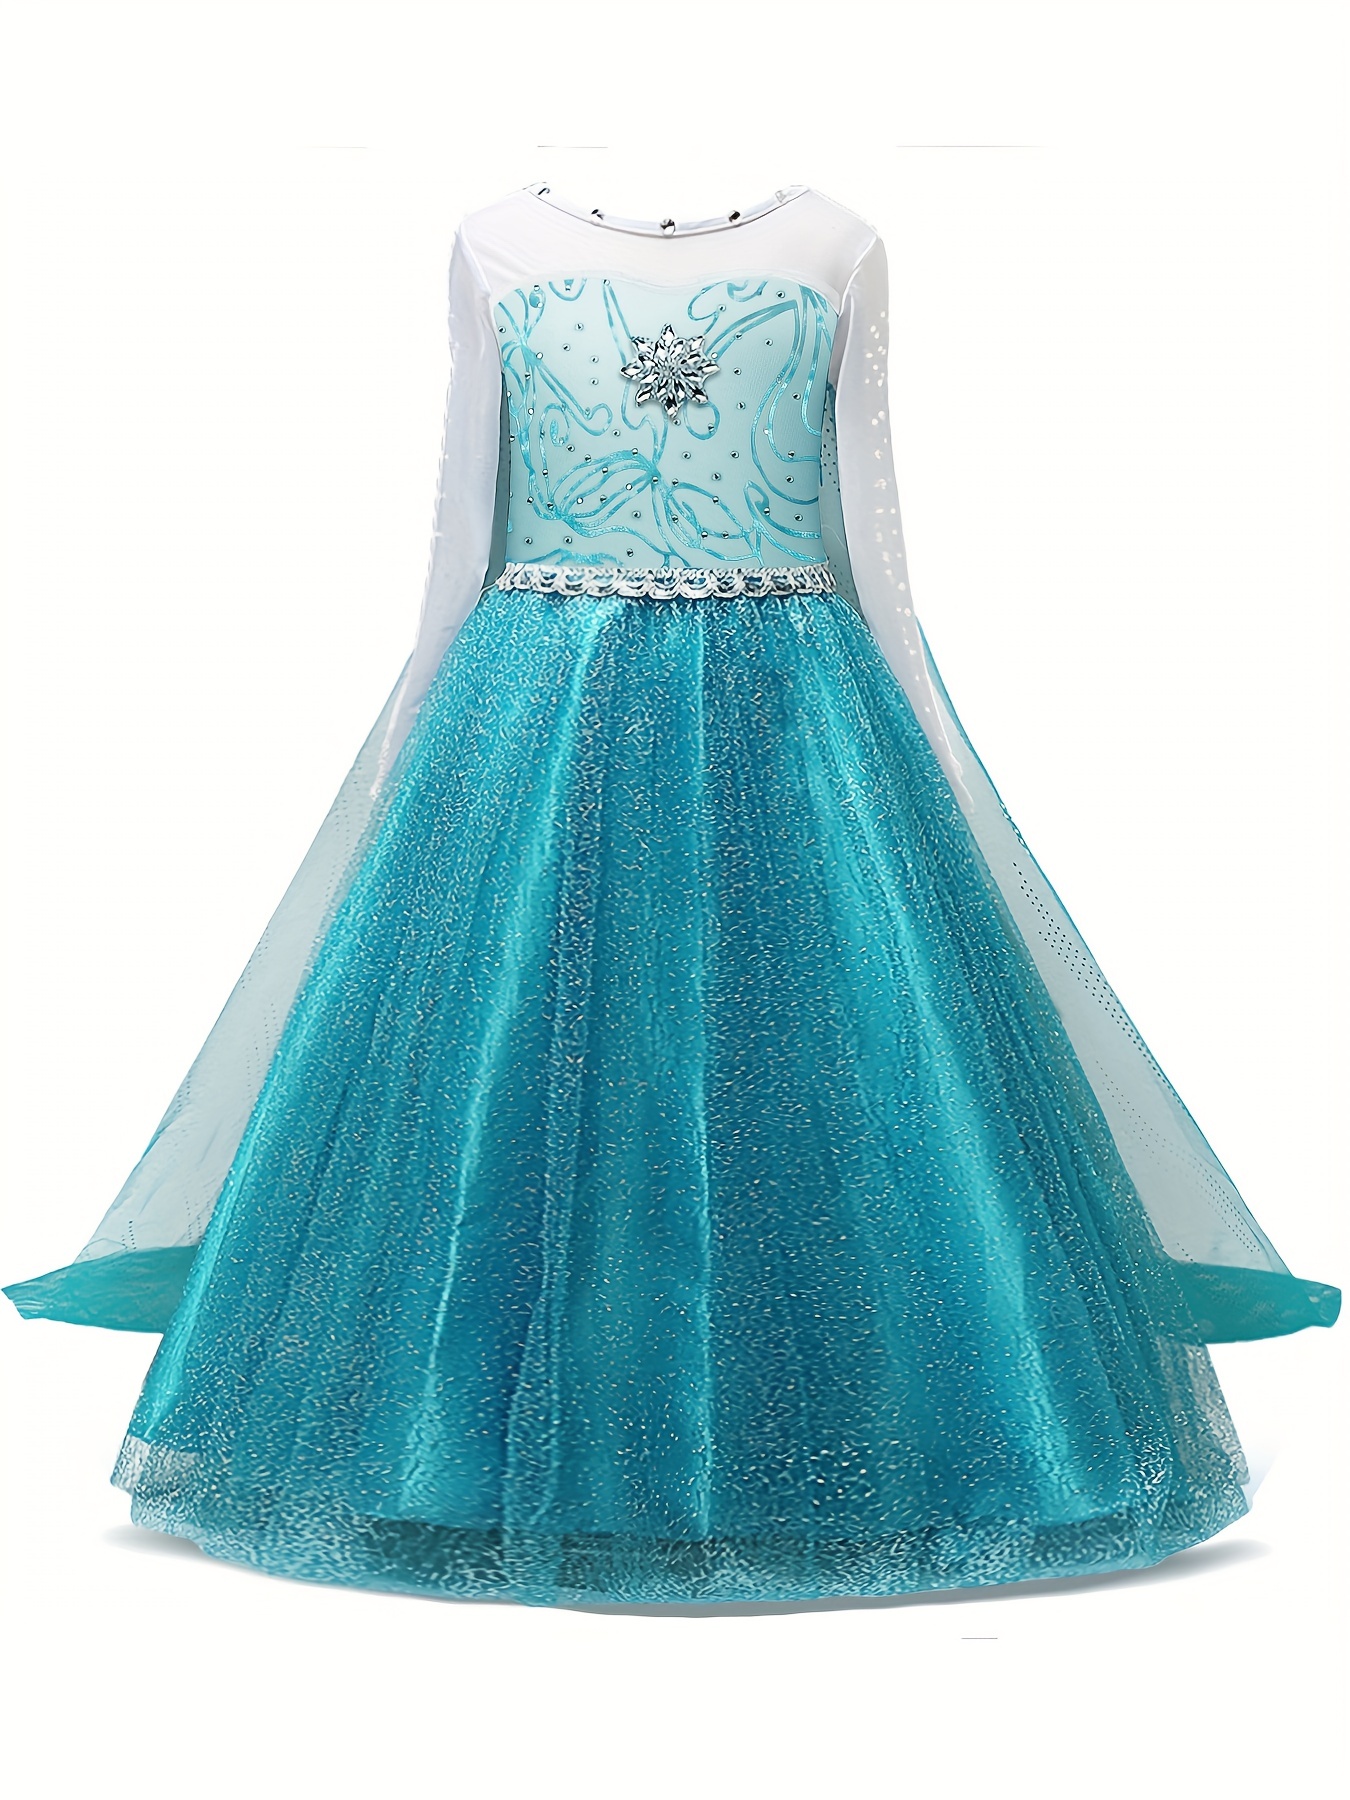 Disguise Disfraz para mujer Disney Frozen 2 Elsa Prestige